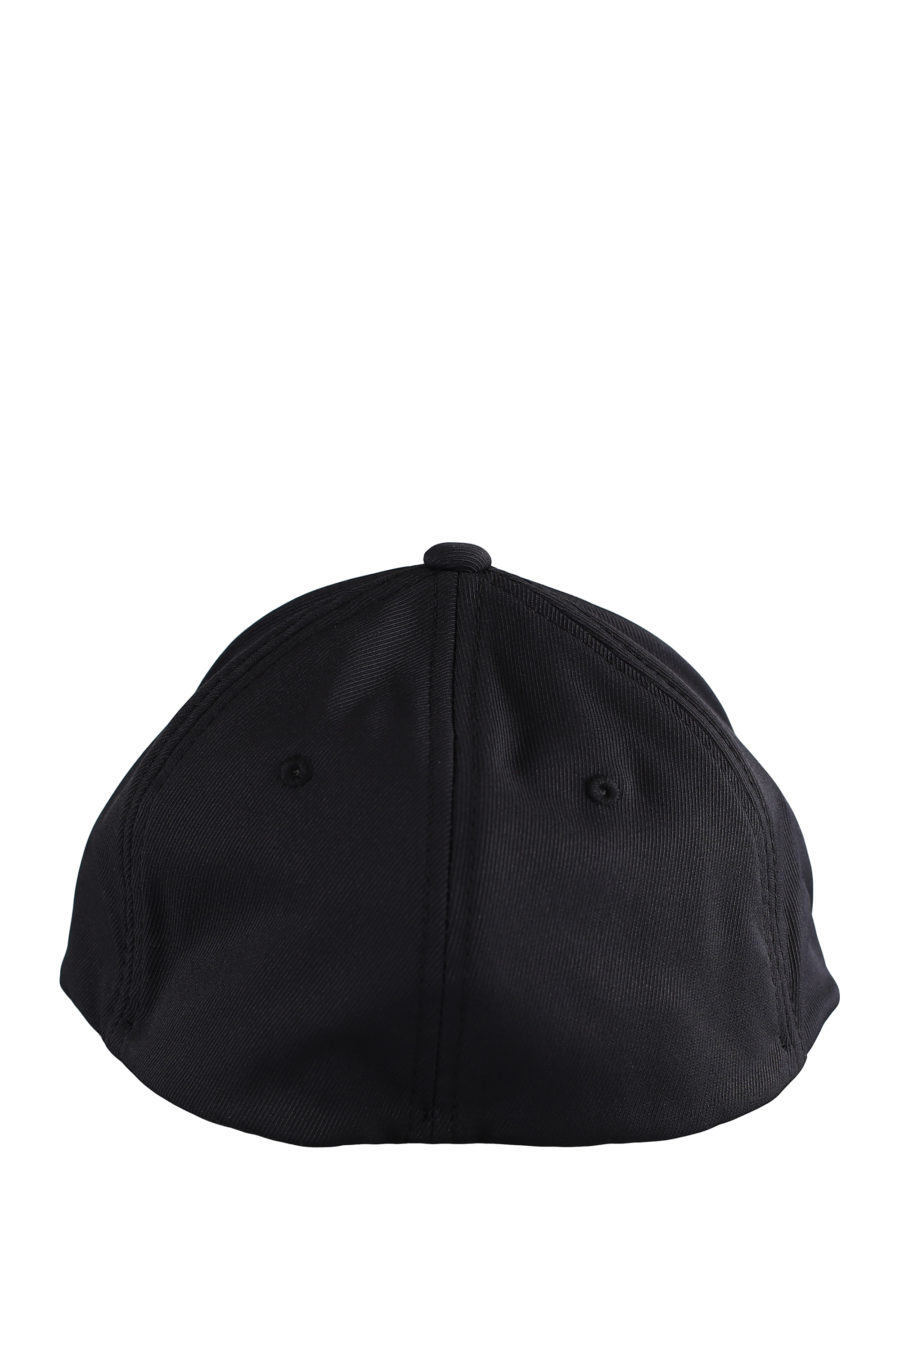 Gorra negra con logo "Karl" en blanco - IMG 9596